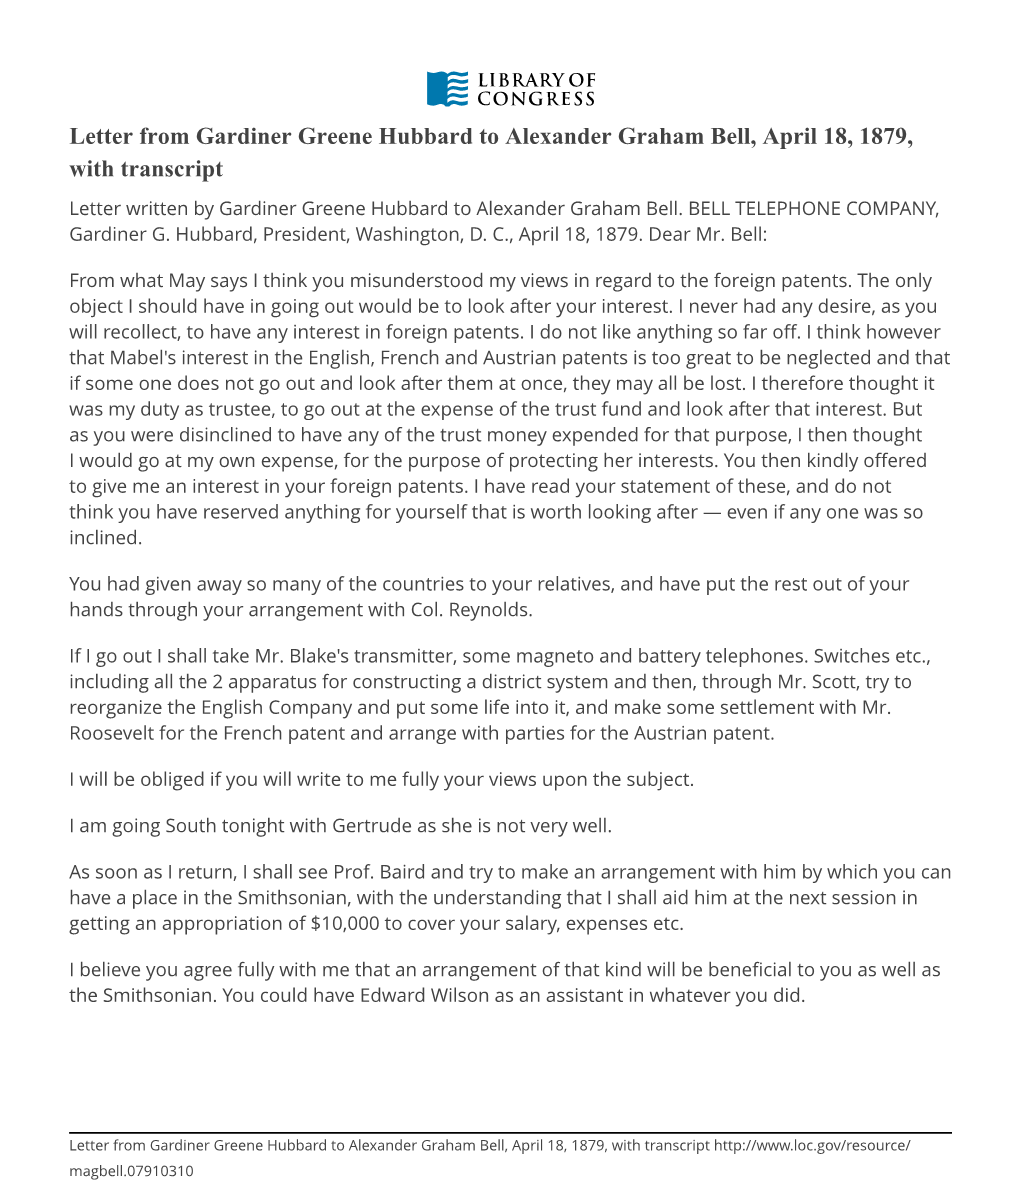 Letter from Gardiner Greene Hubbard to Alexander Graham Bell, April 18, 1879, with Transcript